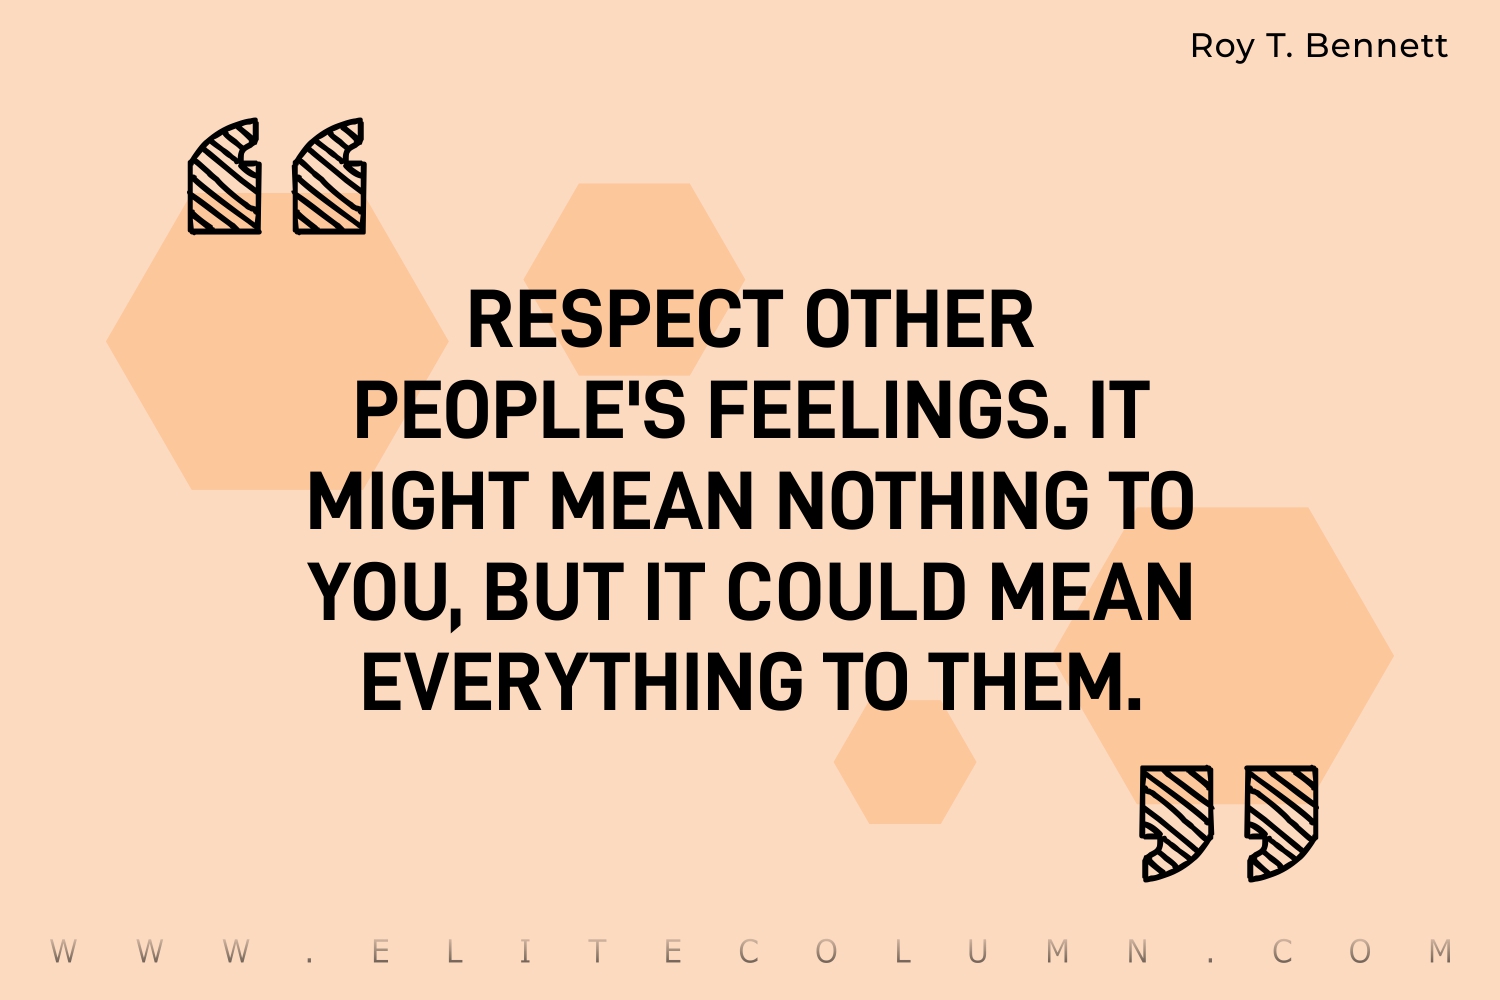 respect peoples feelings